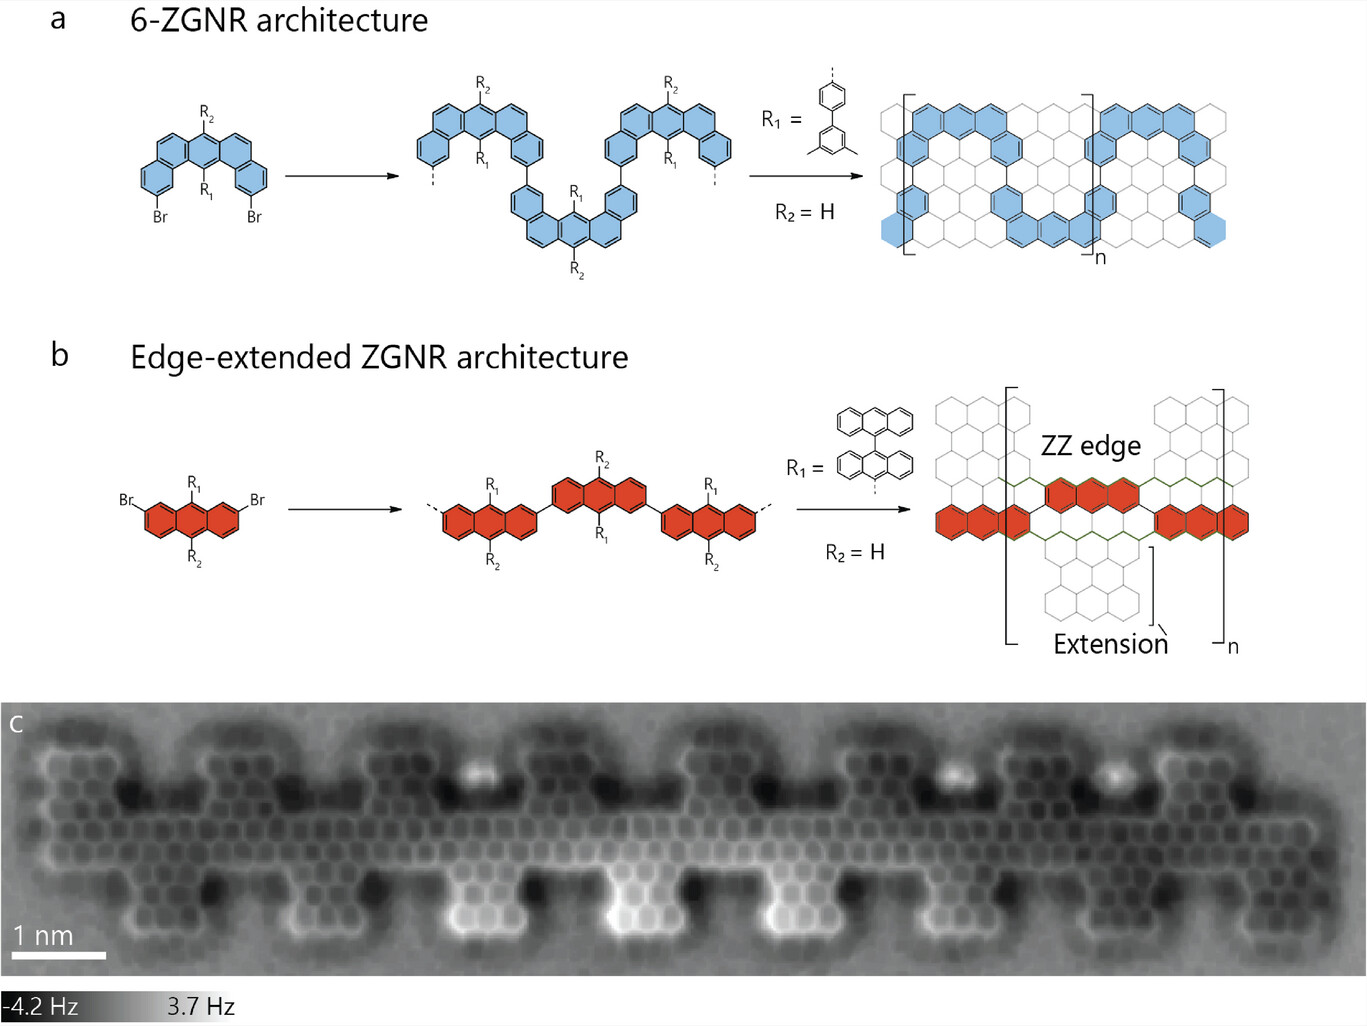 Design motifs to obtain ZGNRs and edge-extended ZGNRs